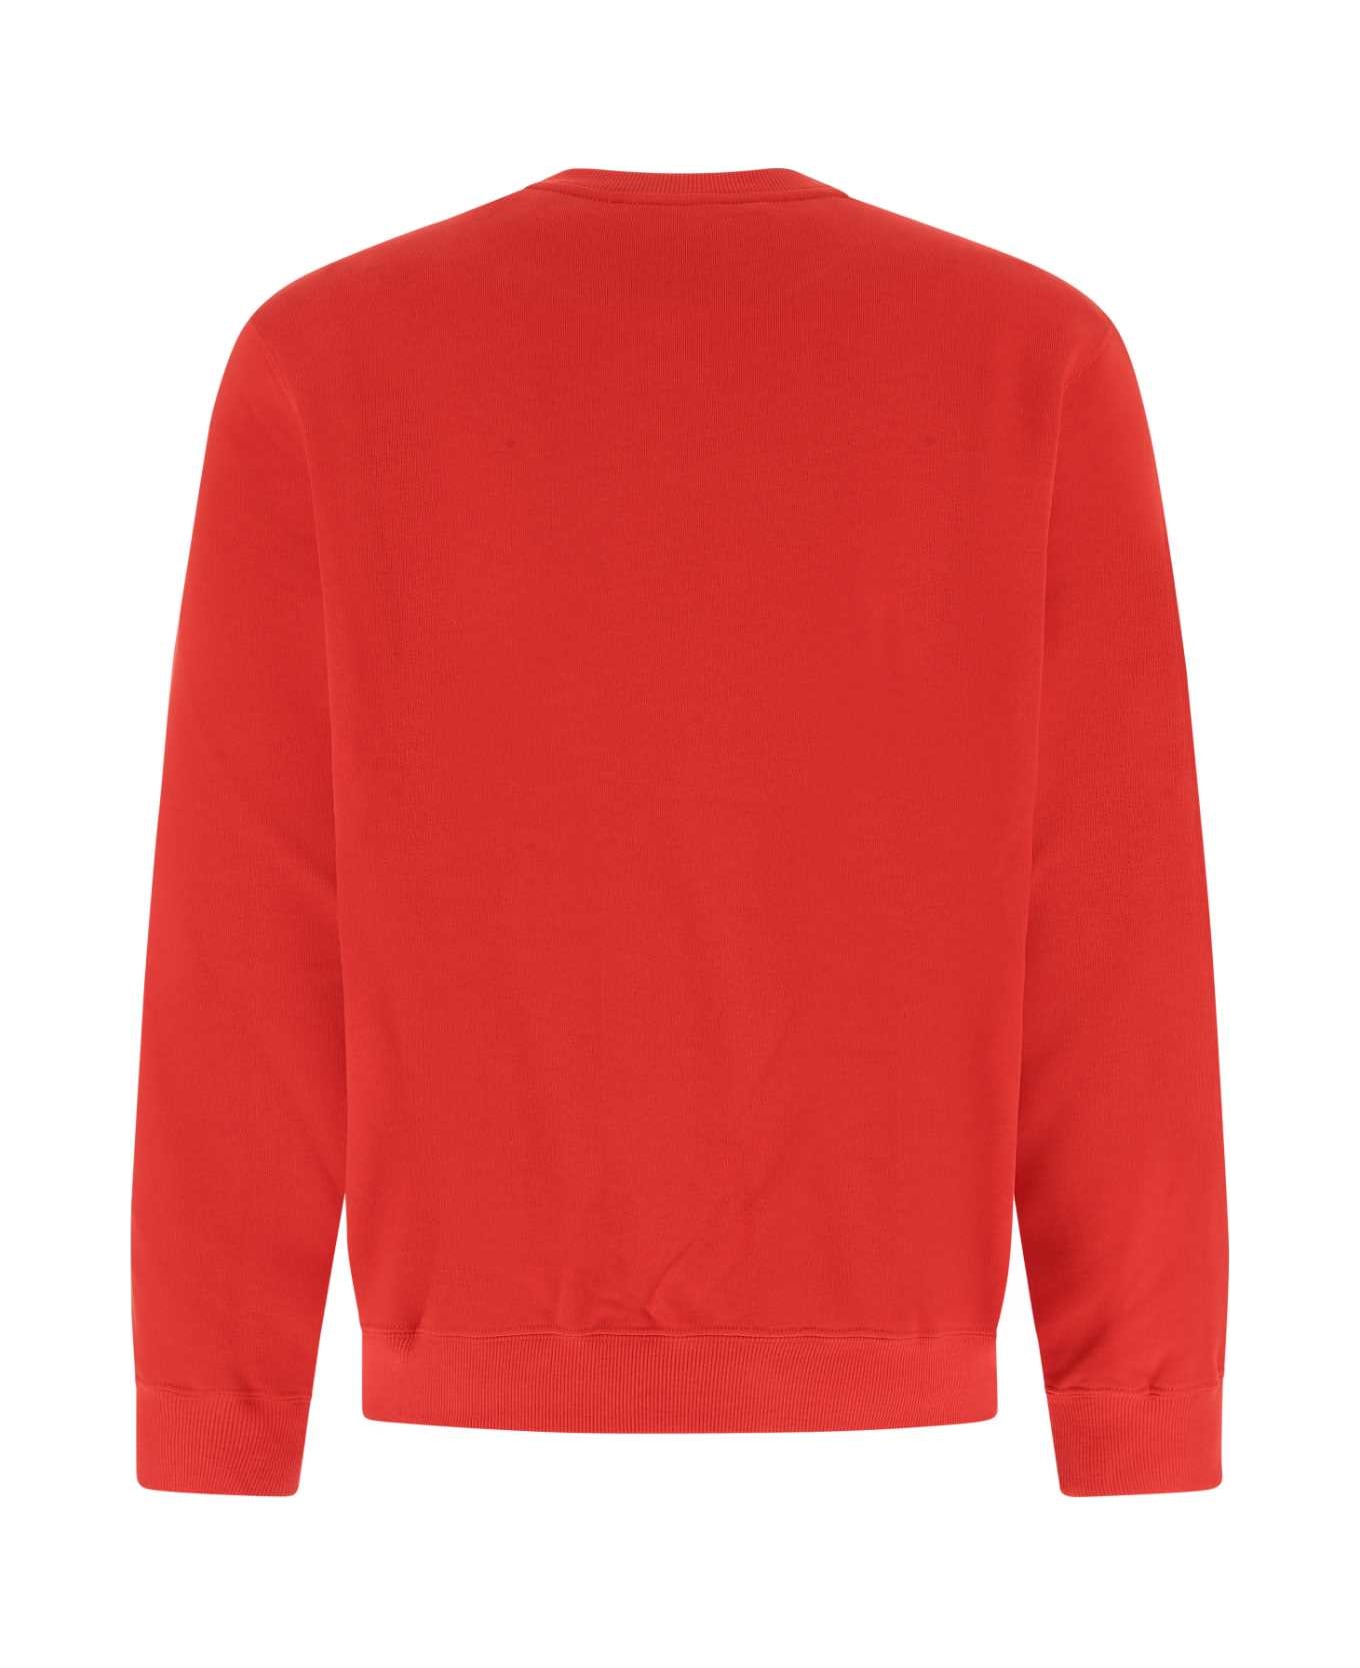 Koché Red Cotton Sweatshirt - 314